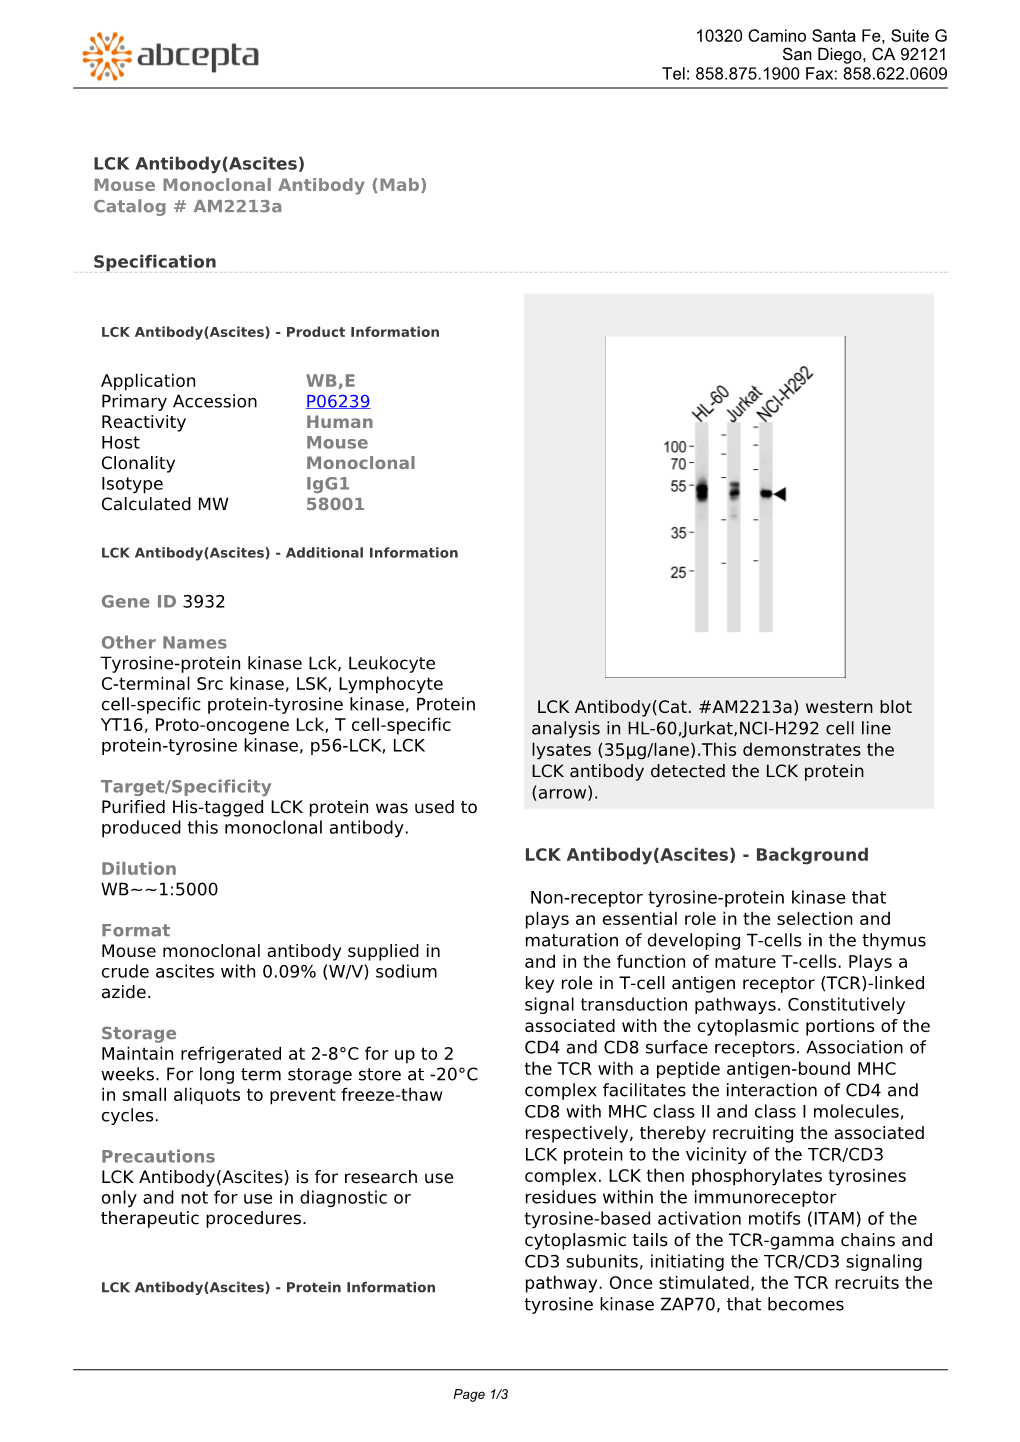 LCK Antibody(Ascites) Mouse Monoclonal Antibody (Mab) Catalog # Am2213a